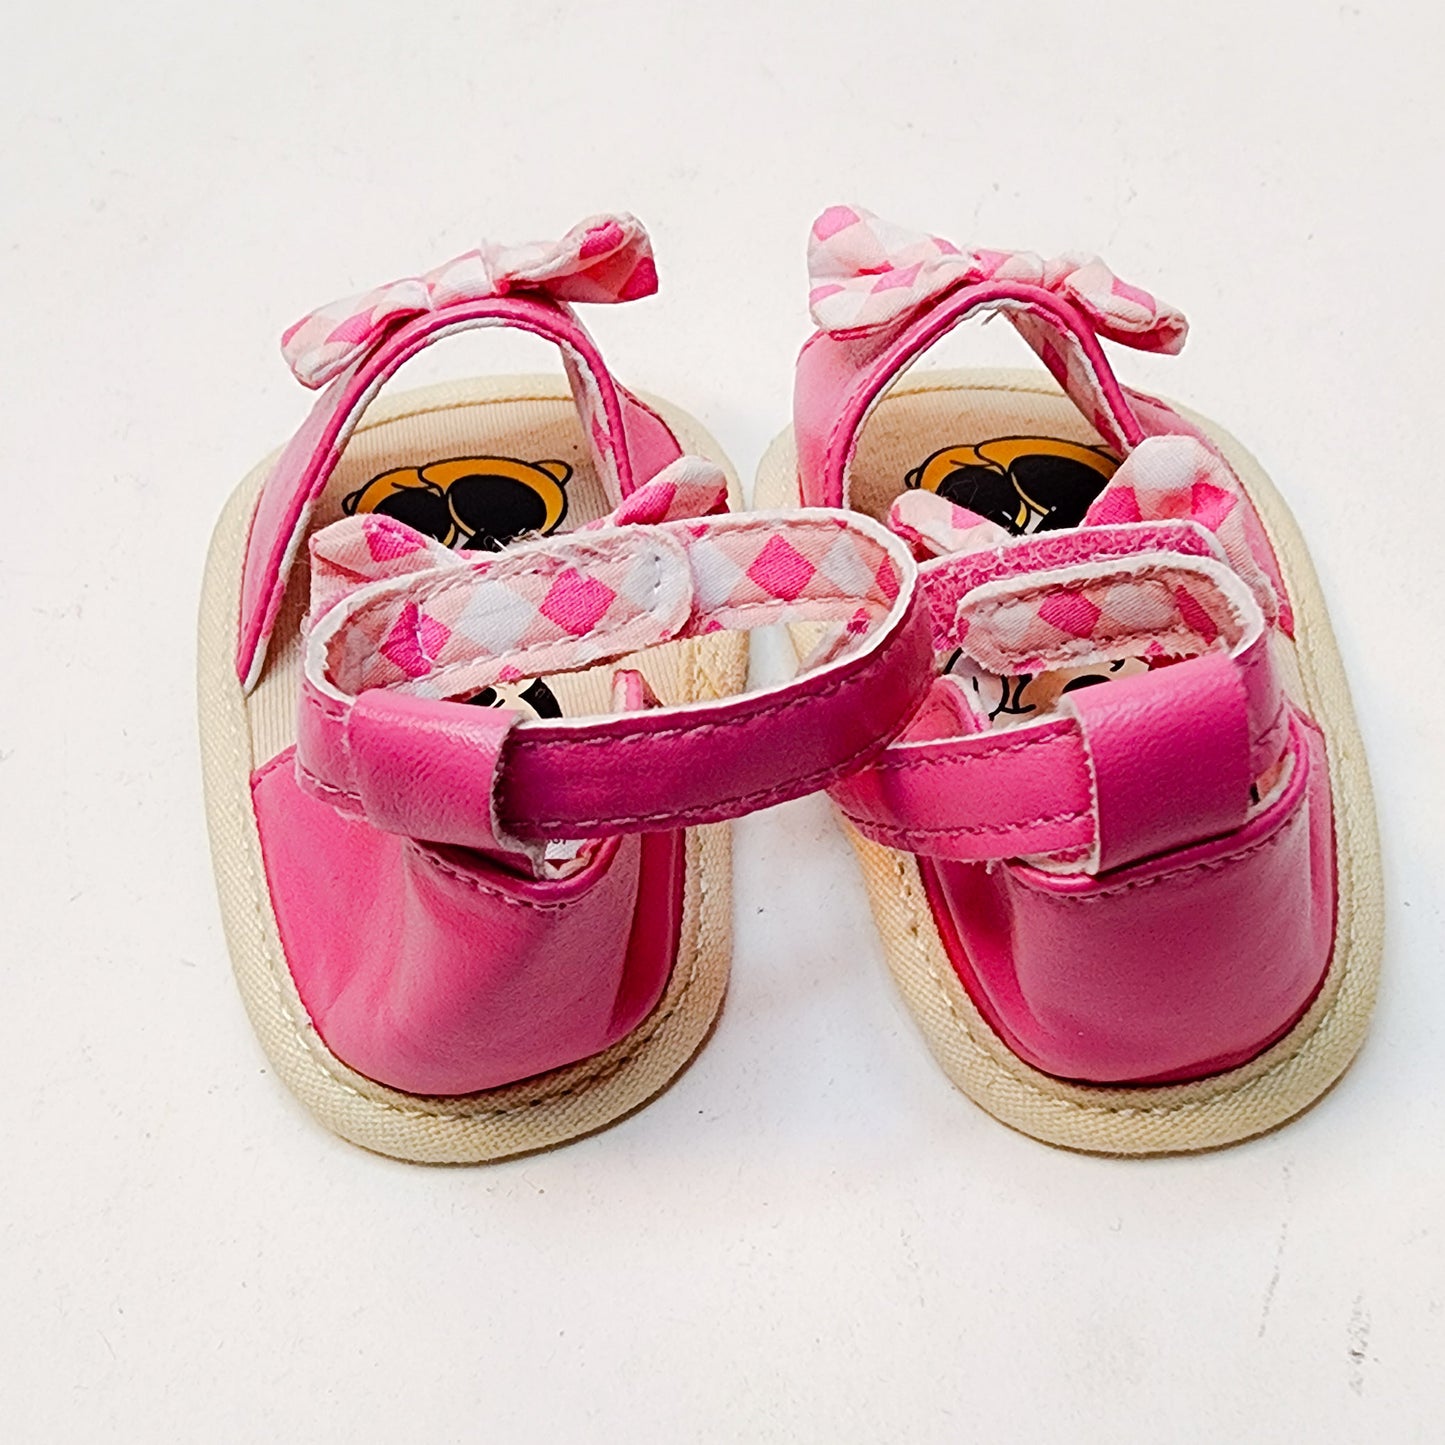 Disney Summer Children Infant Toddler Shoe Flat Bottom Lightweight Open Toe 0-3 month